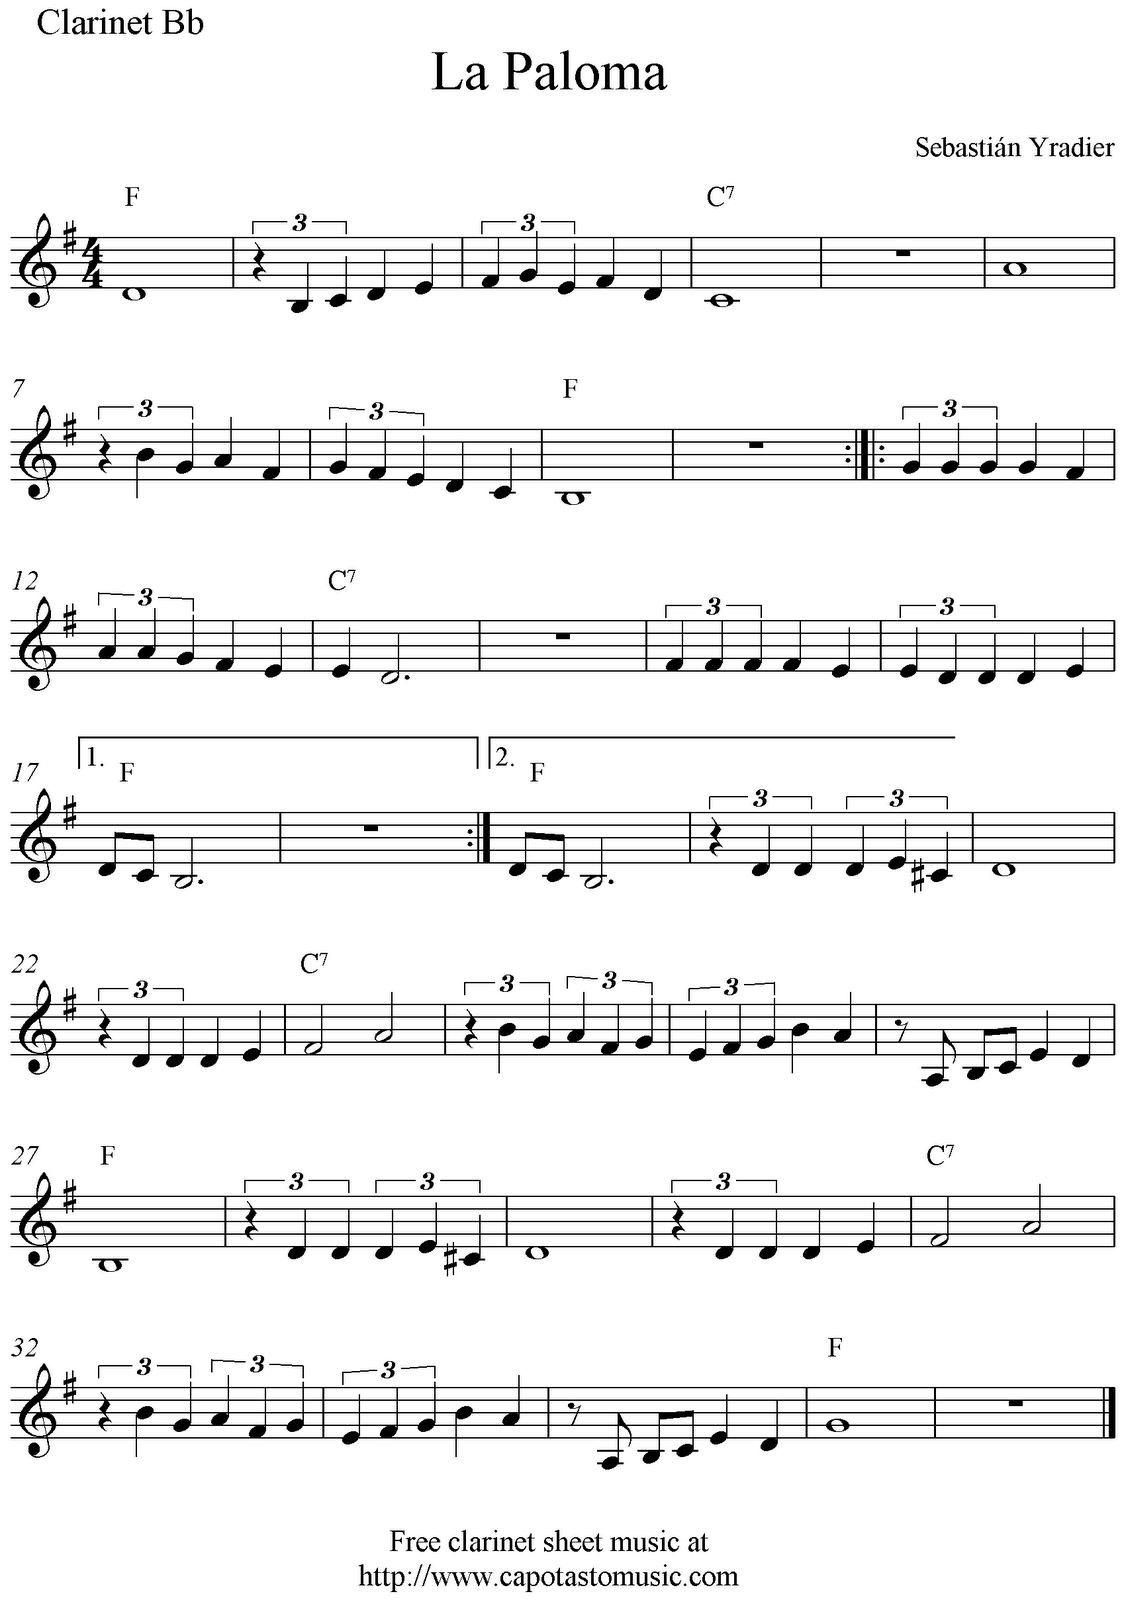 La Paloma, Free Clarinet Sheet Music Notes - Free Printable Clarinet Sheet Music